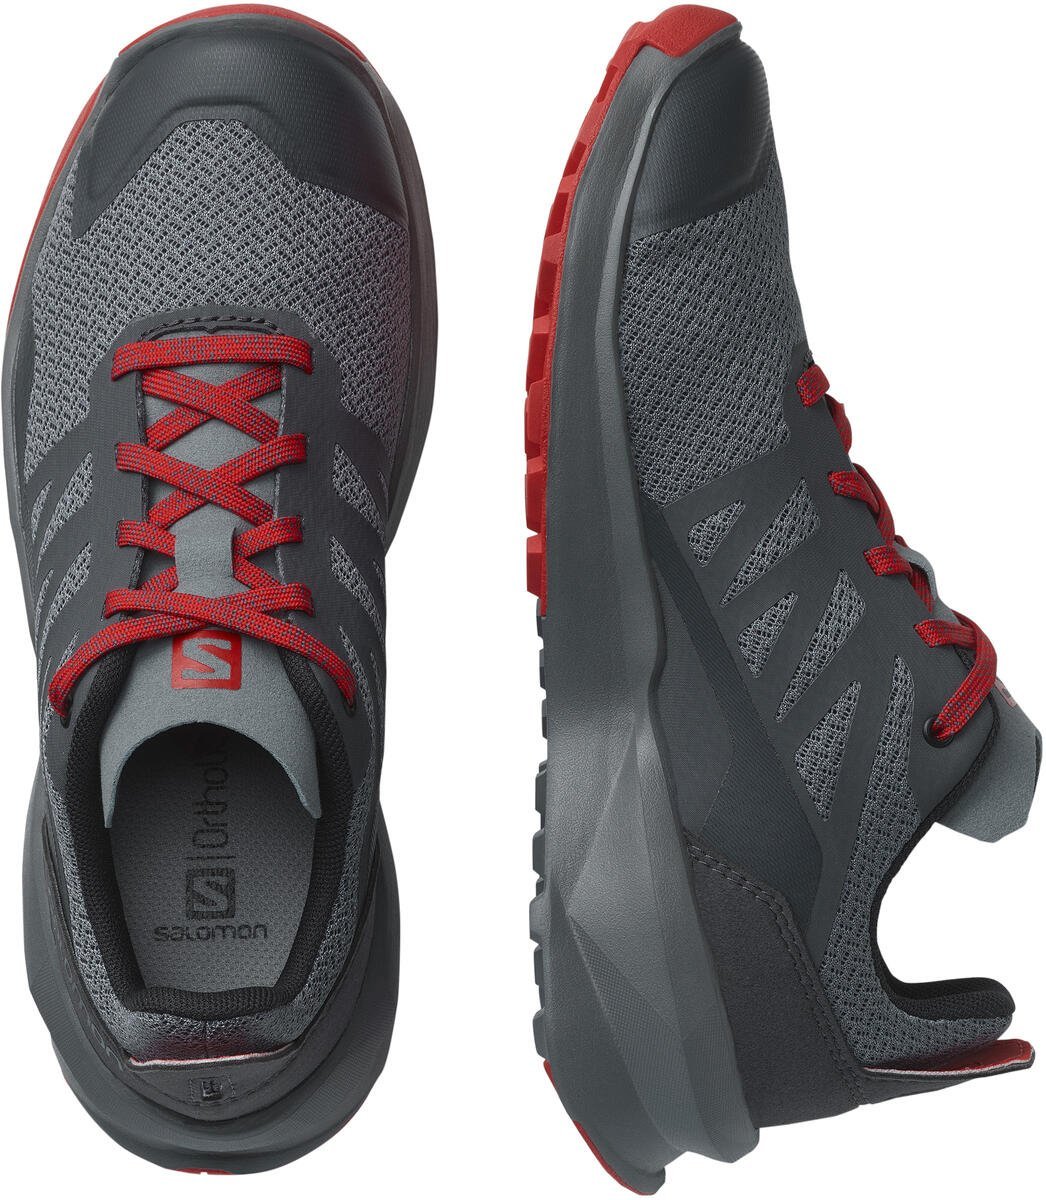 Topánky Salomon PATROL J - grey/red